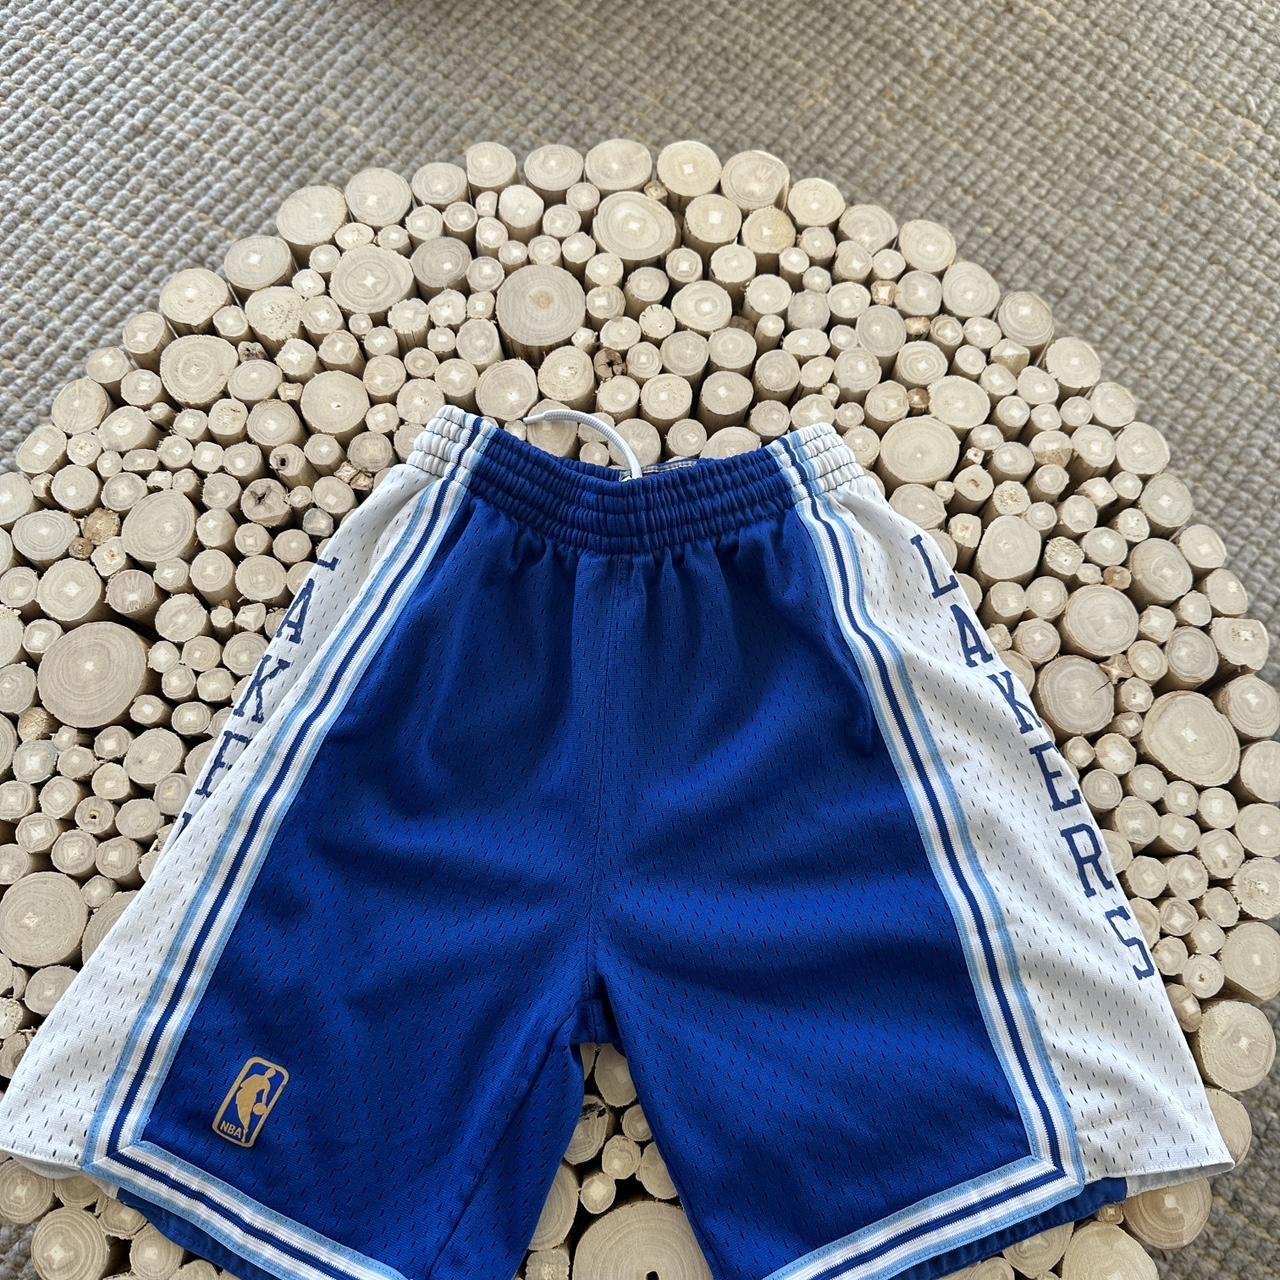 NBA Kids' Shorts - Blue